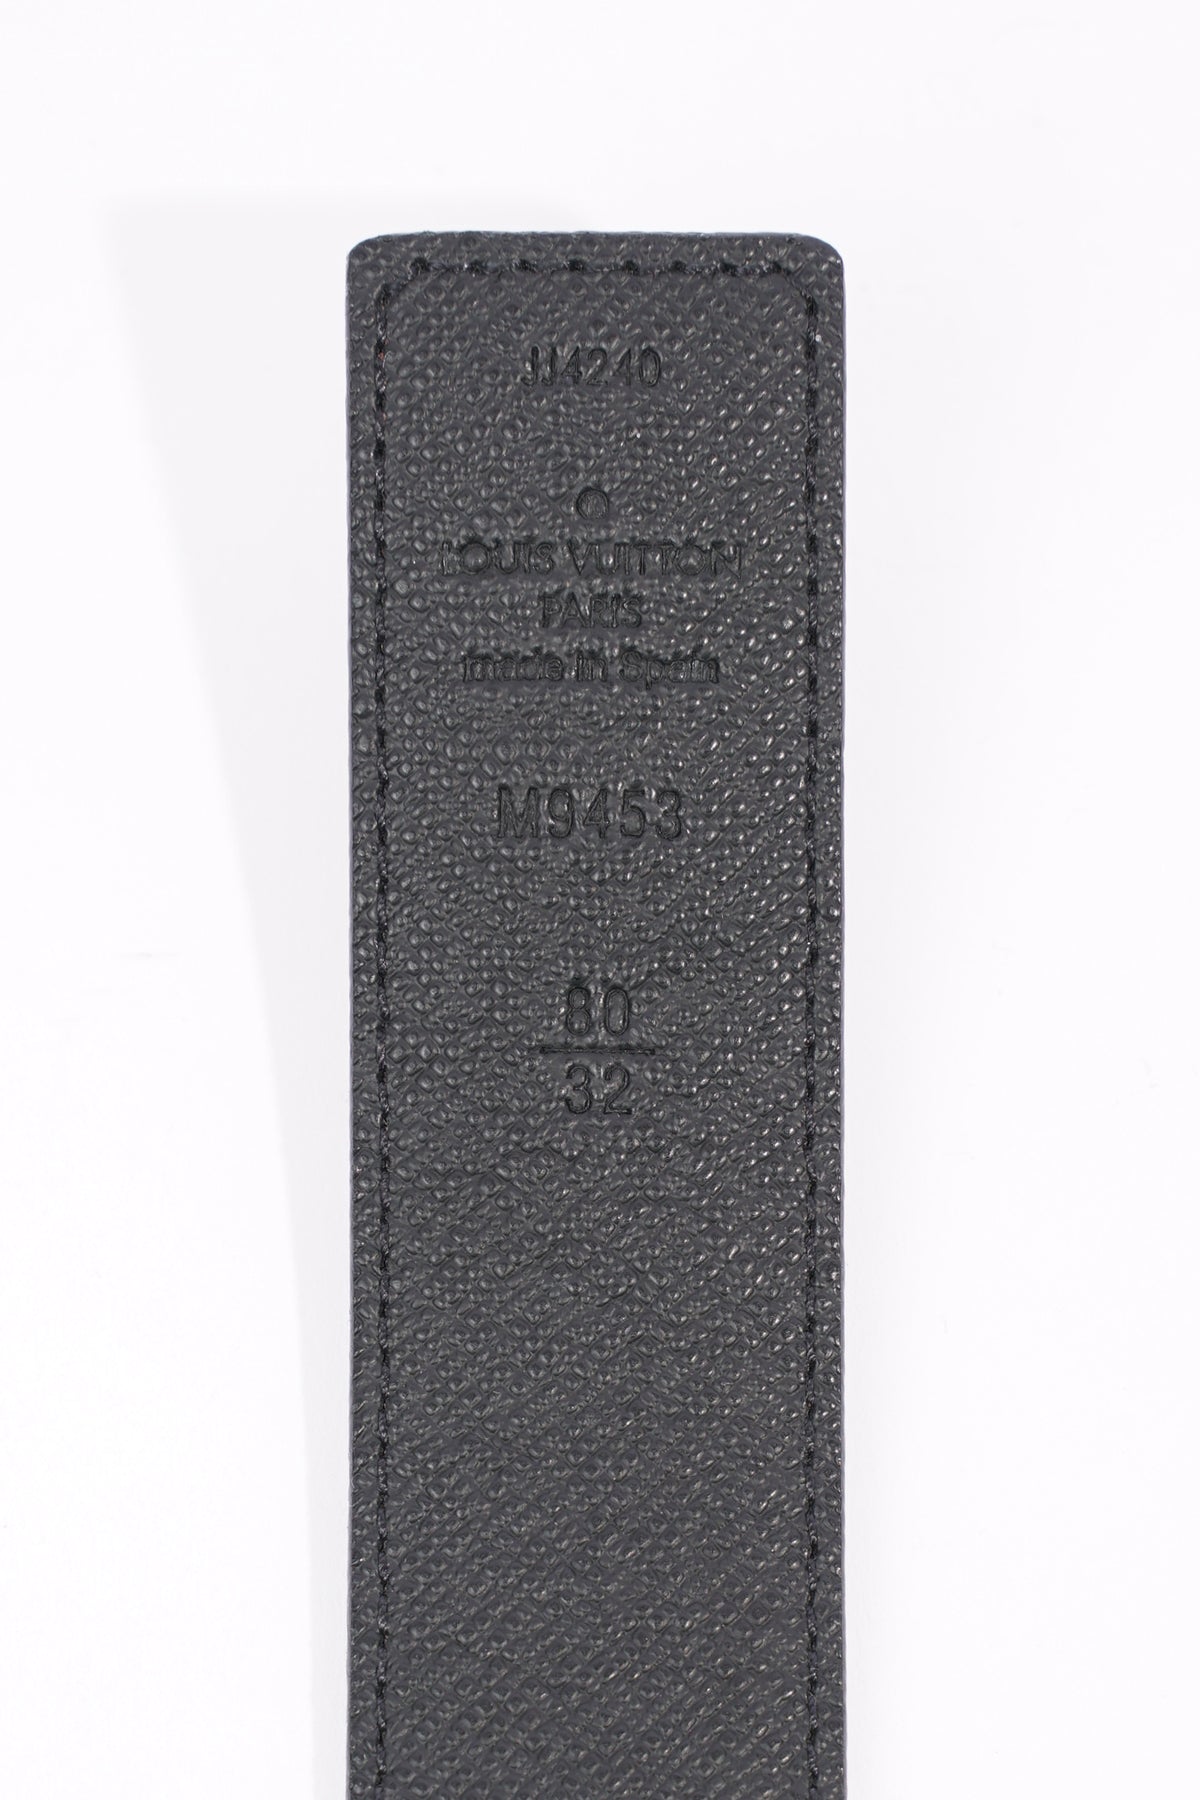 Louis Vuitton Vintage Monogram Belt Pull Buckle (Size 80/32) at